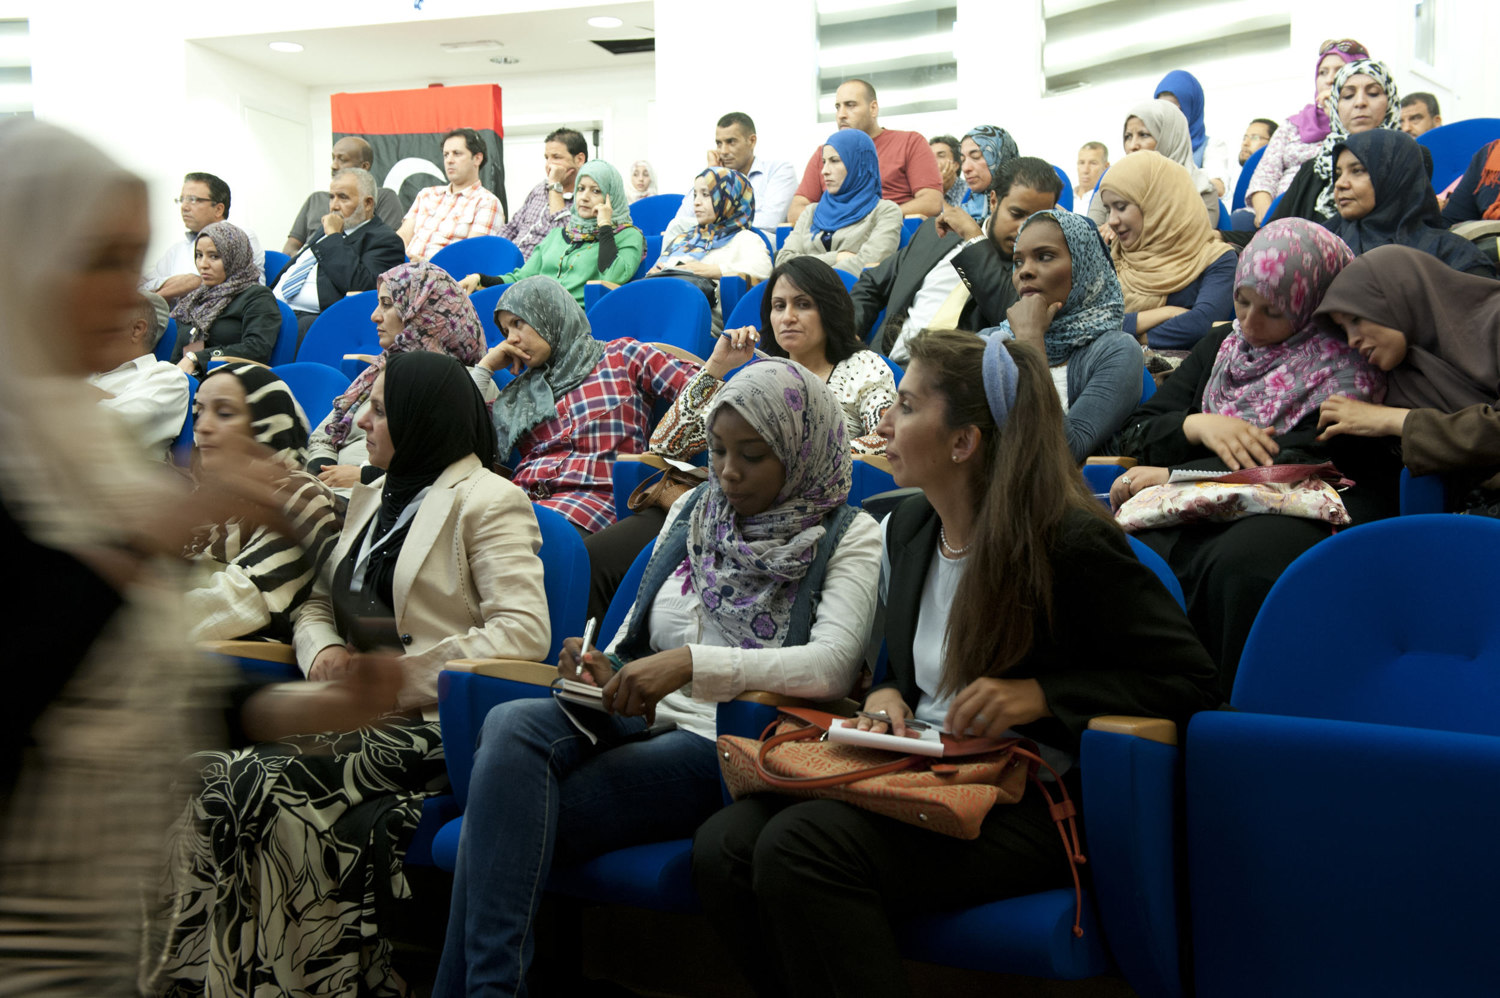  Women take notes during the Libyan International Women's Organization meeting in Tripoli on July 11th, 2012.
 